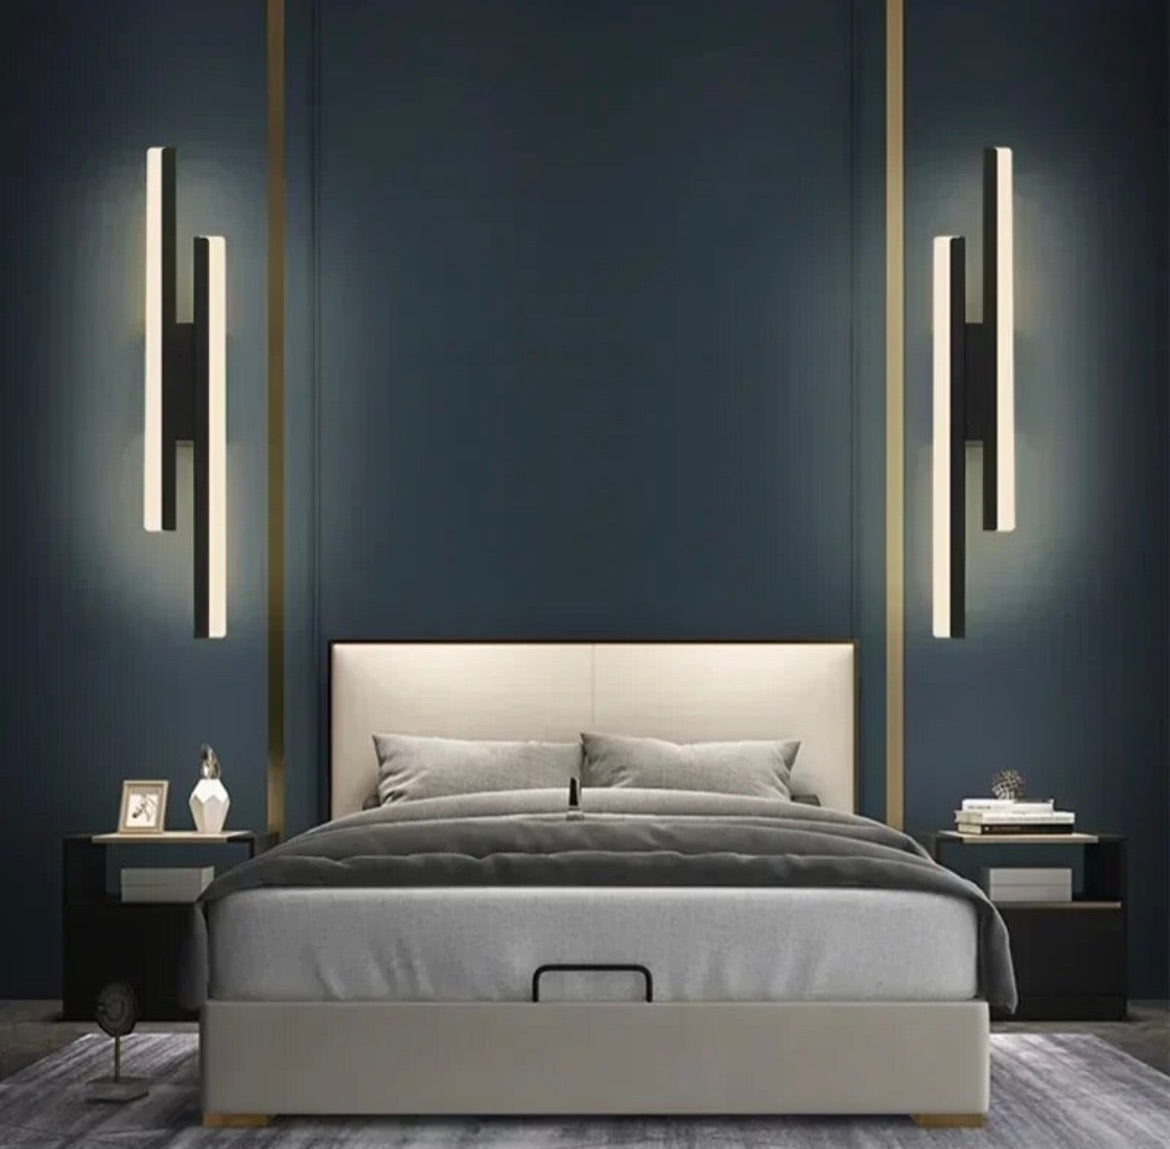 LED Bedroom Wall Sconce Light